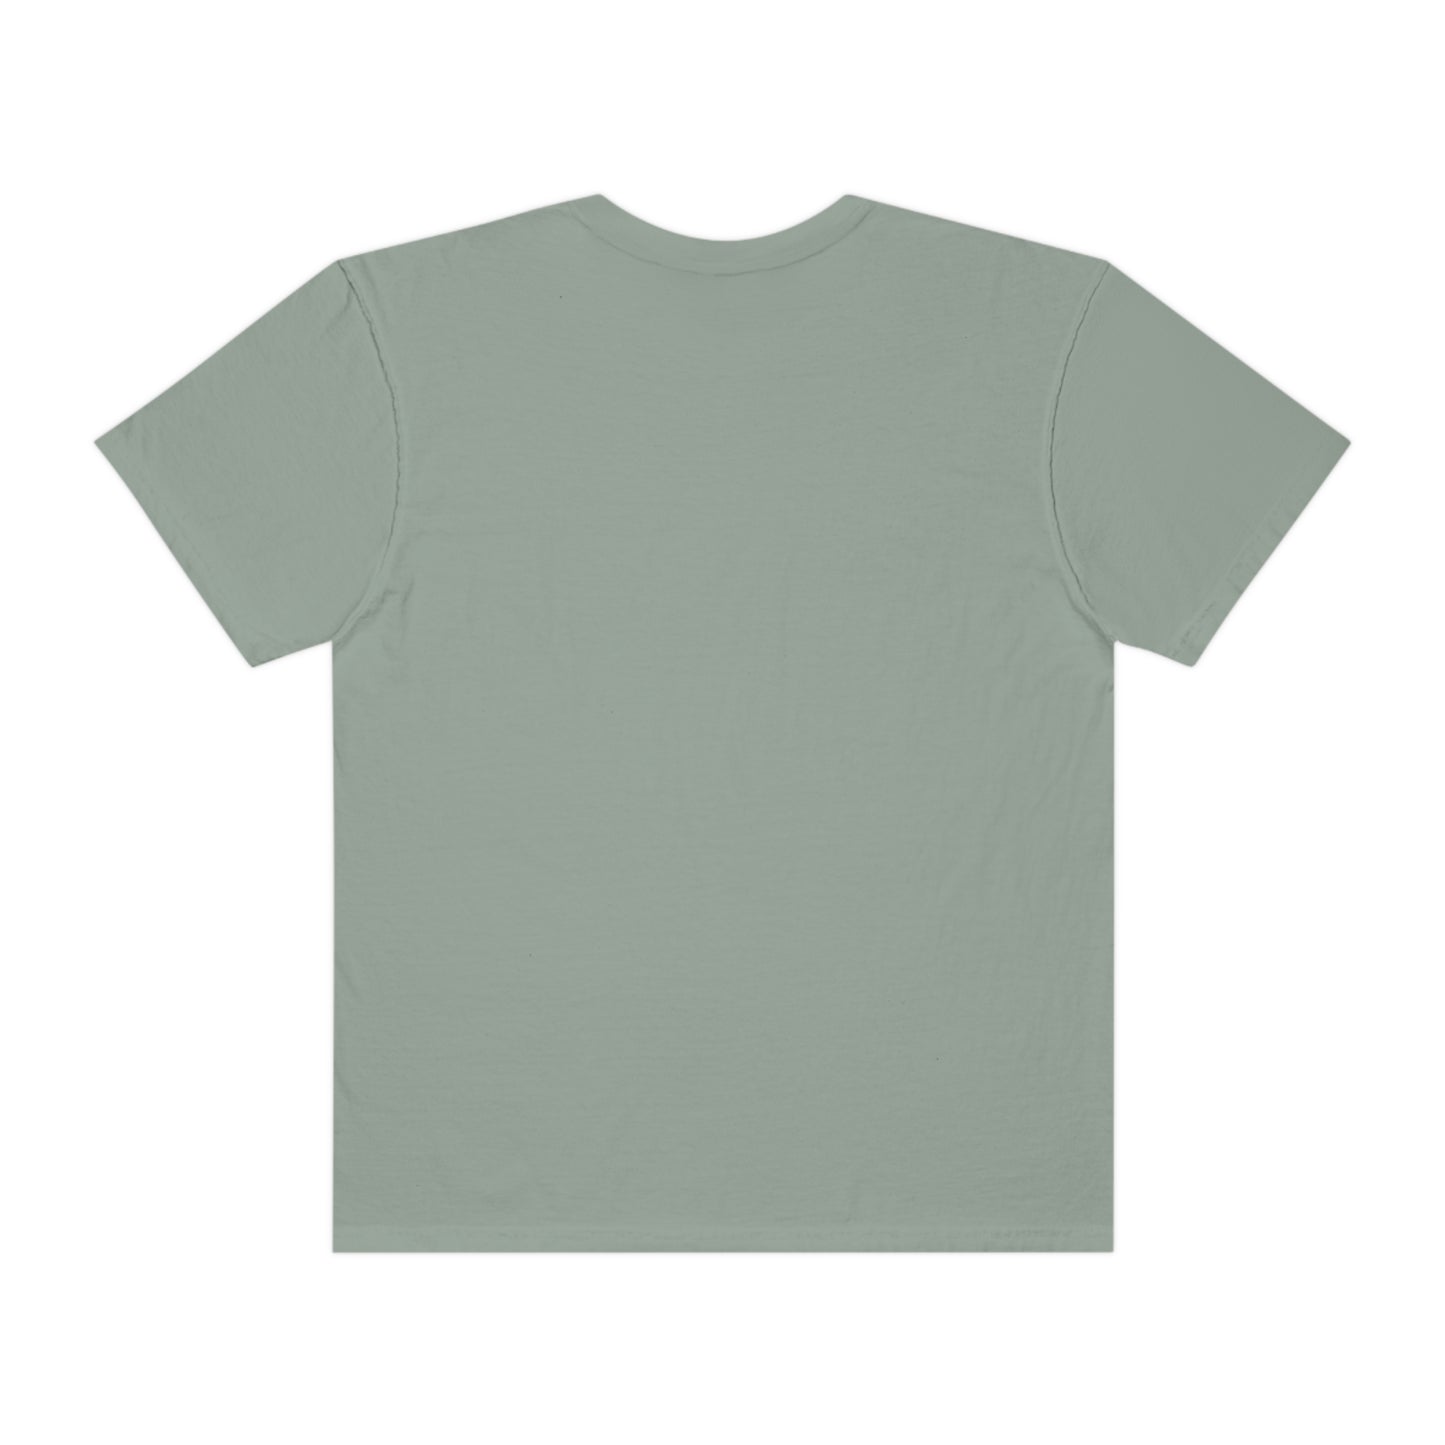 Retro Floral NICU Nurse Shirt , Nurse Appreciation Gift, Neonatal Nurse T-Shirt Comfort Colors 1717